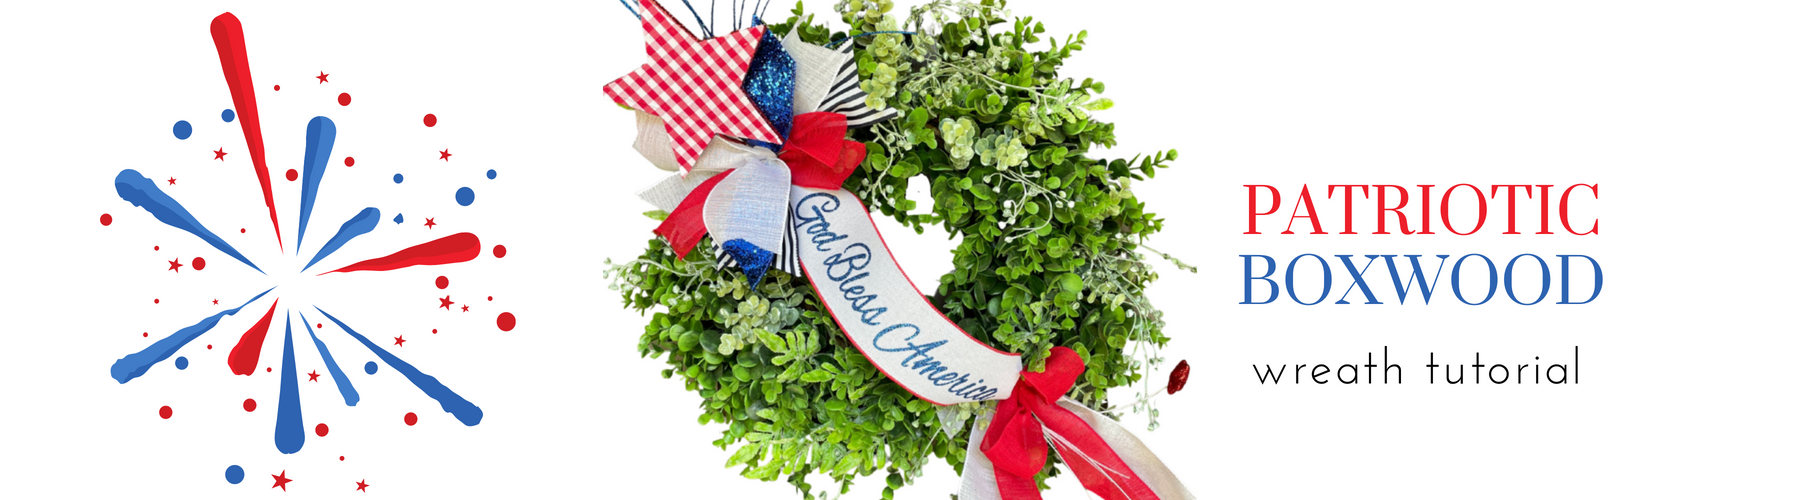 patriotic decoration for boxwood wreath